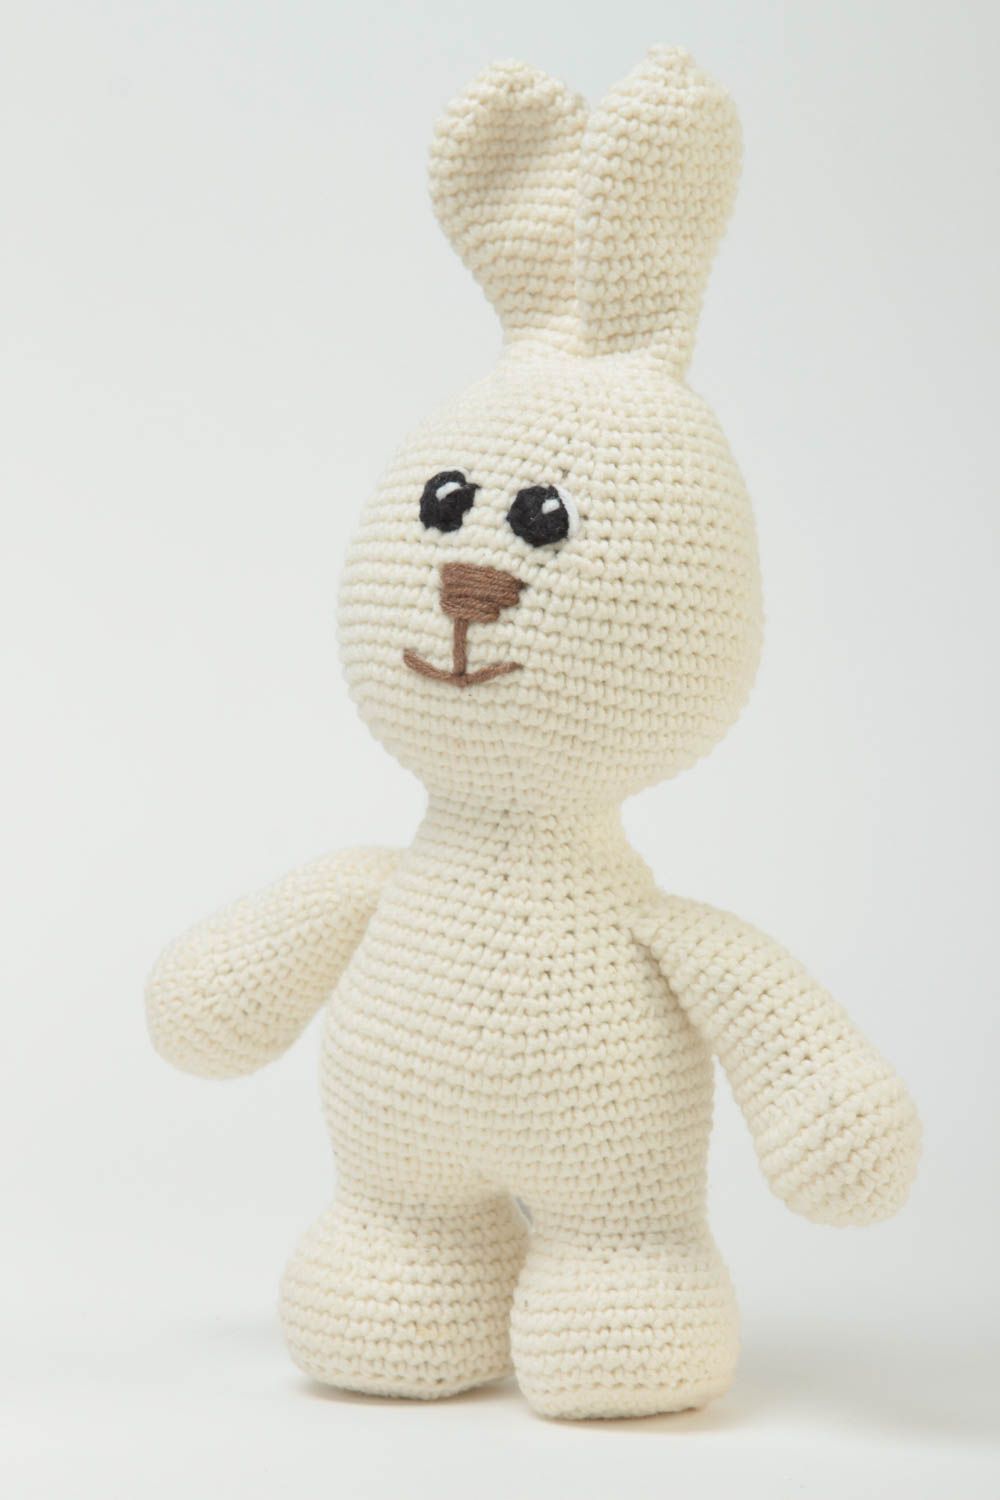 Beautiful handmade crochet toy cute childrens toys birthday gift ideas photo 2